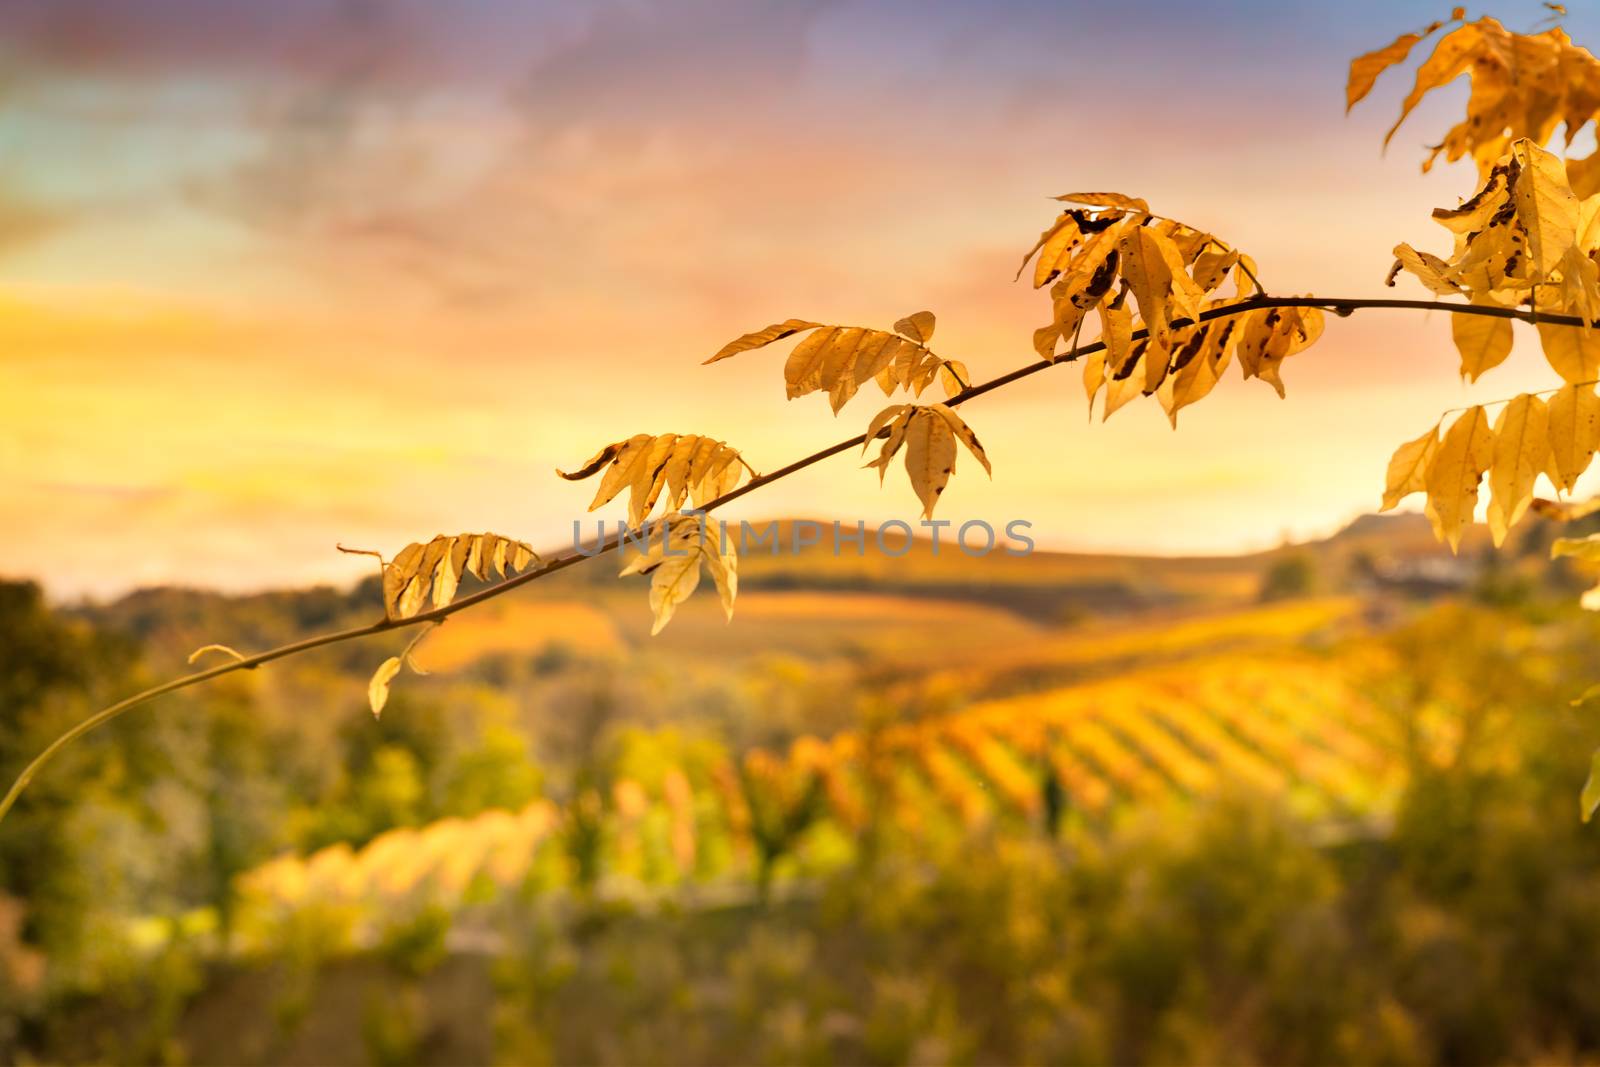 autumn and wine spirit by ventdusud